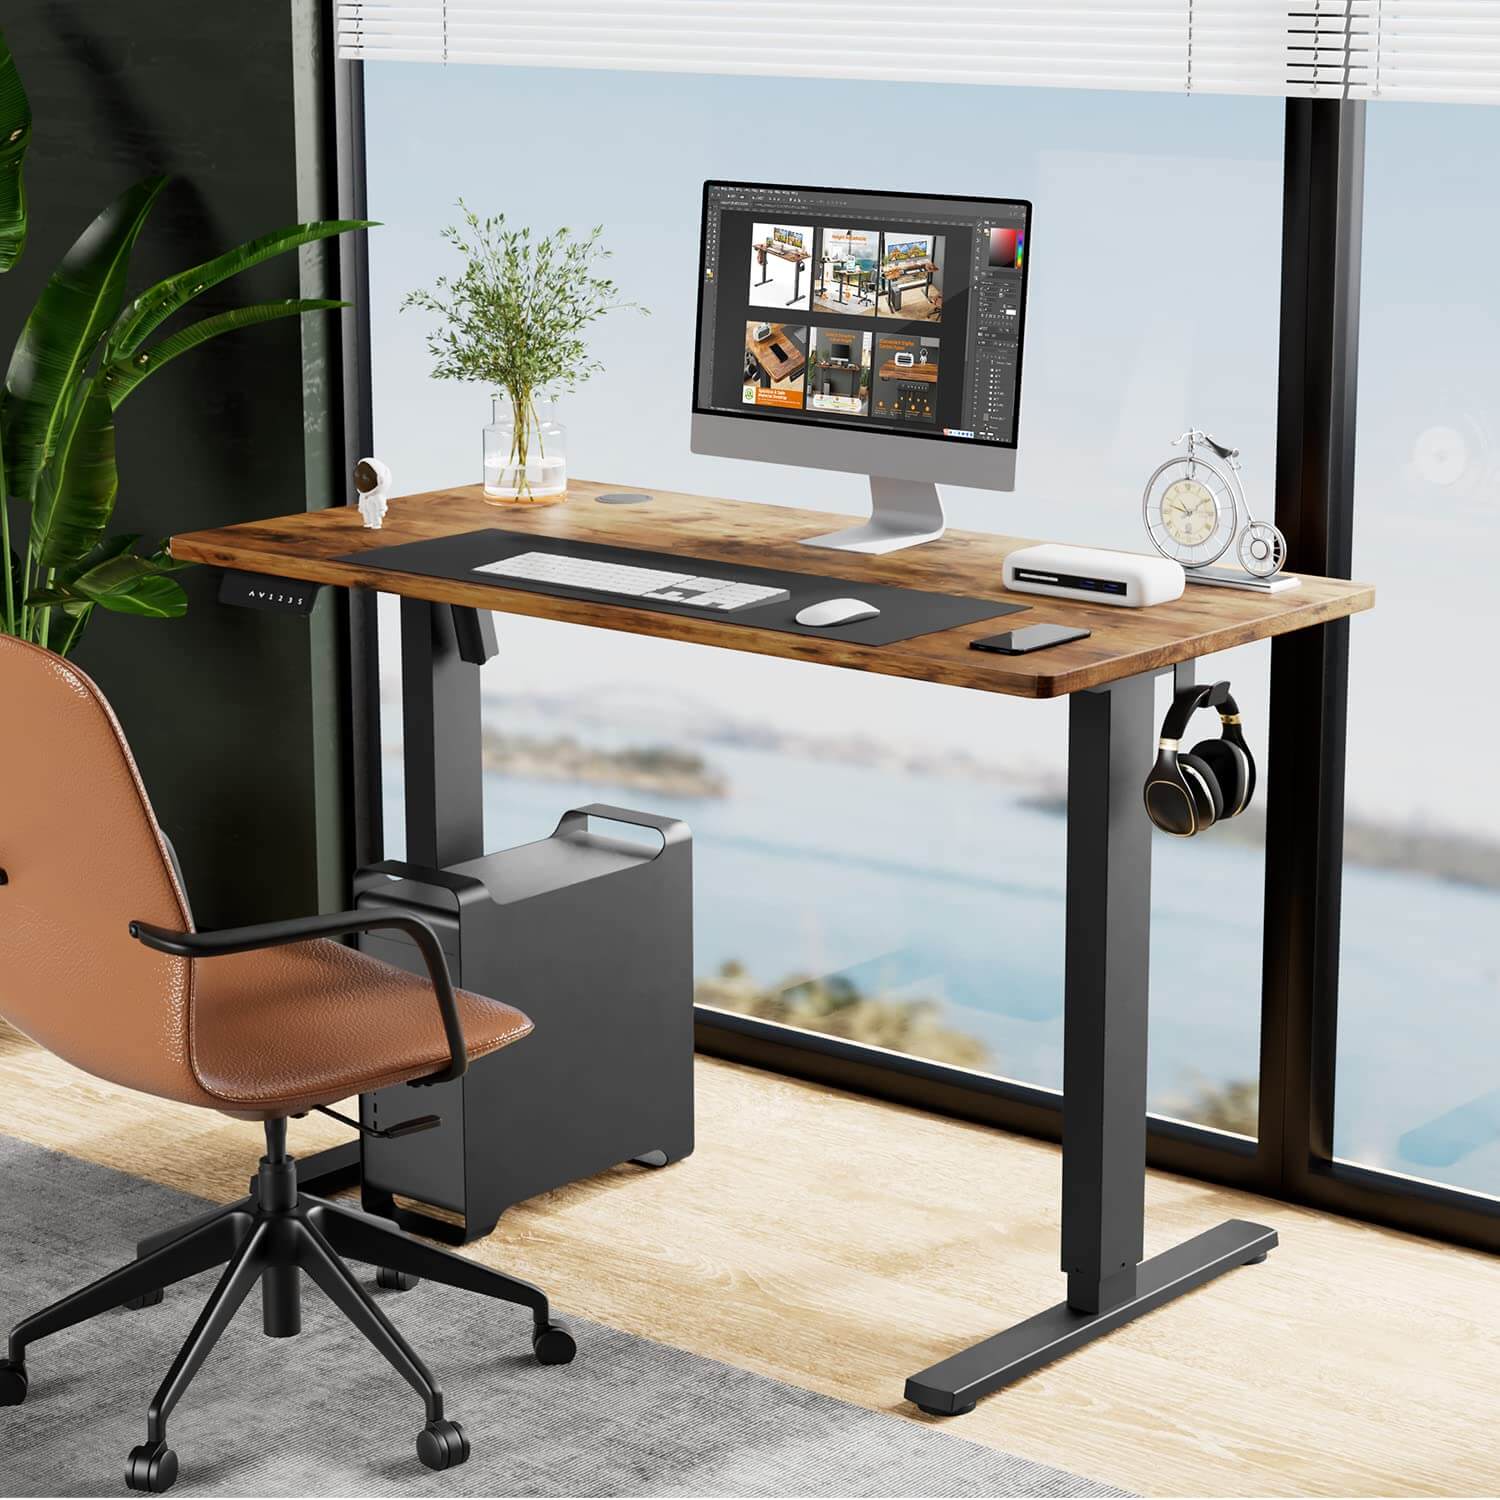 electric-adjustable-standing-desk#Color_Brown#Size_55'' x 24"